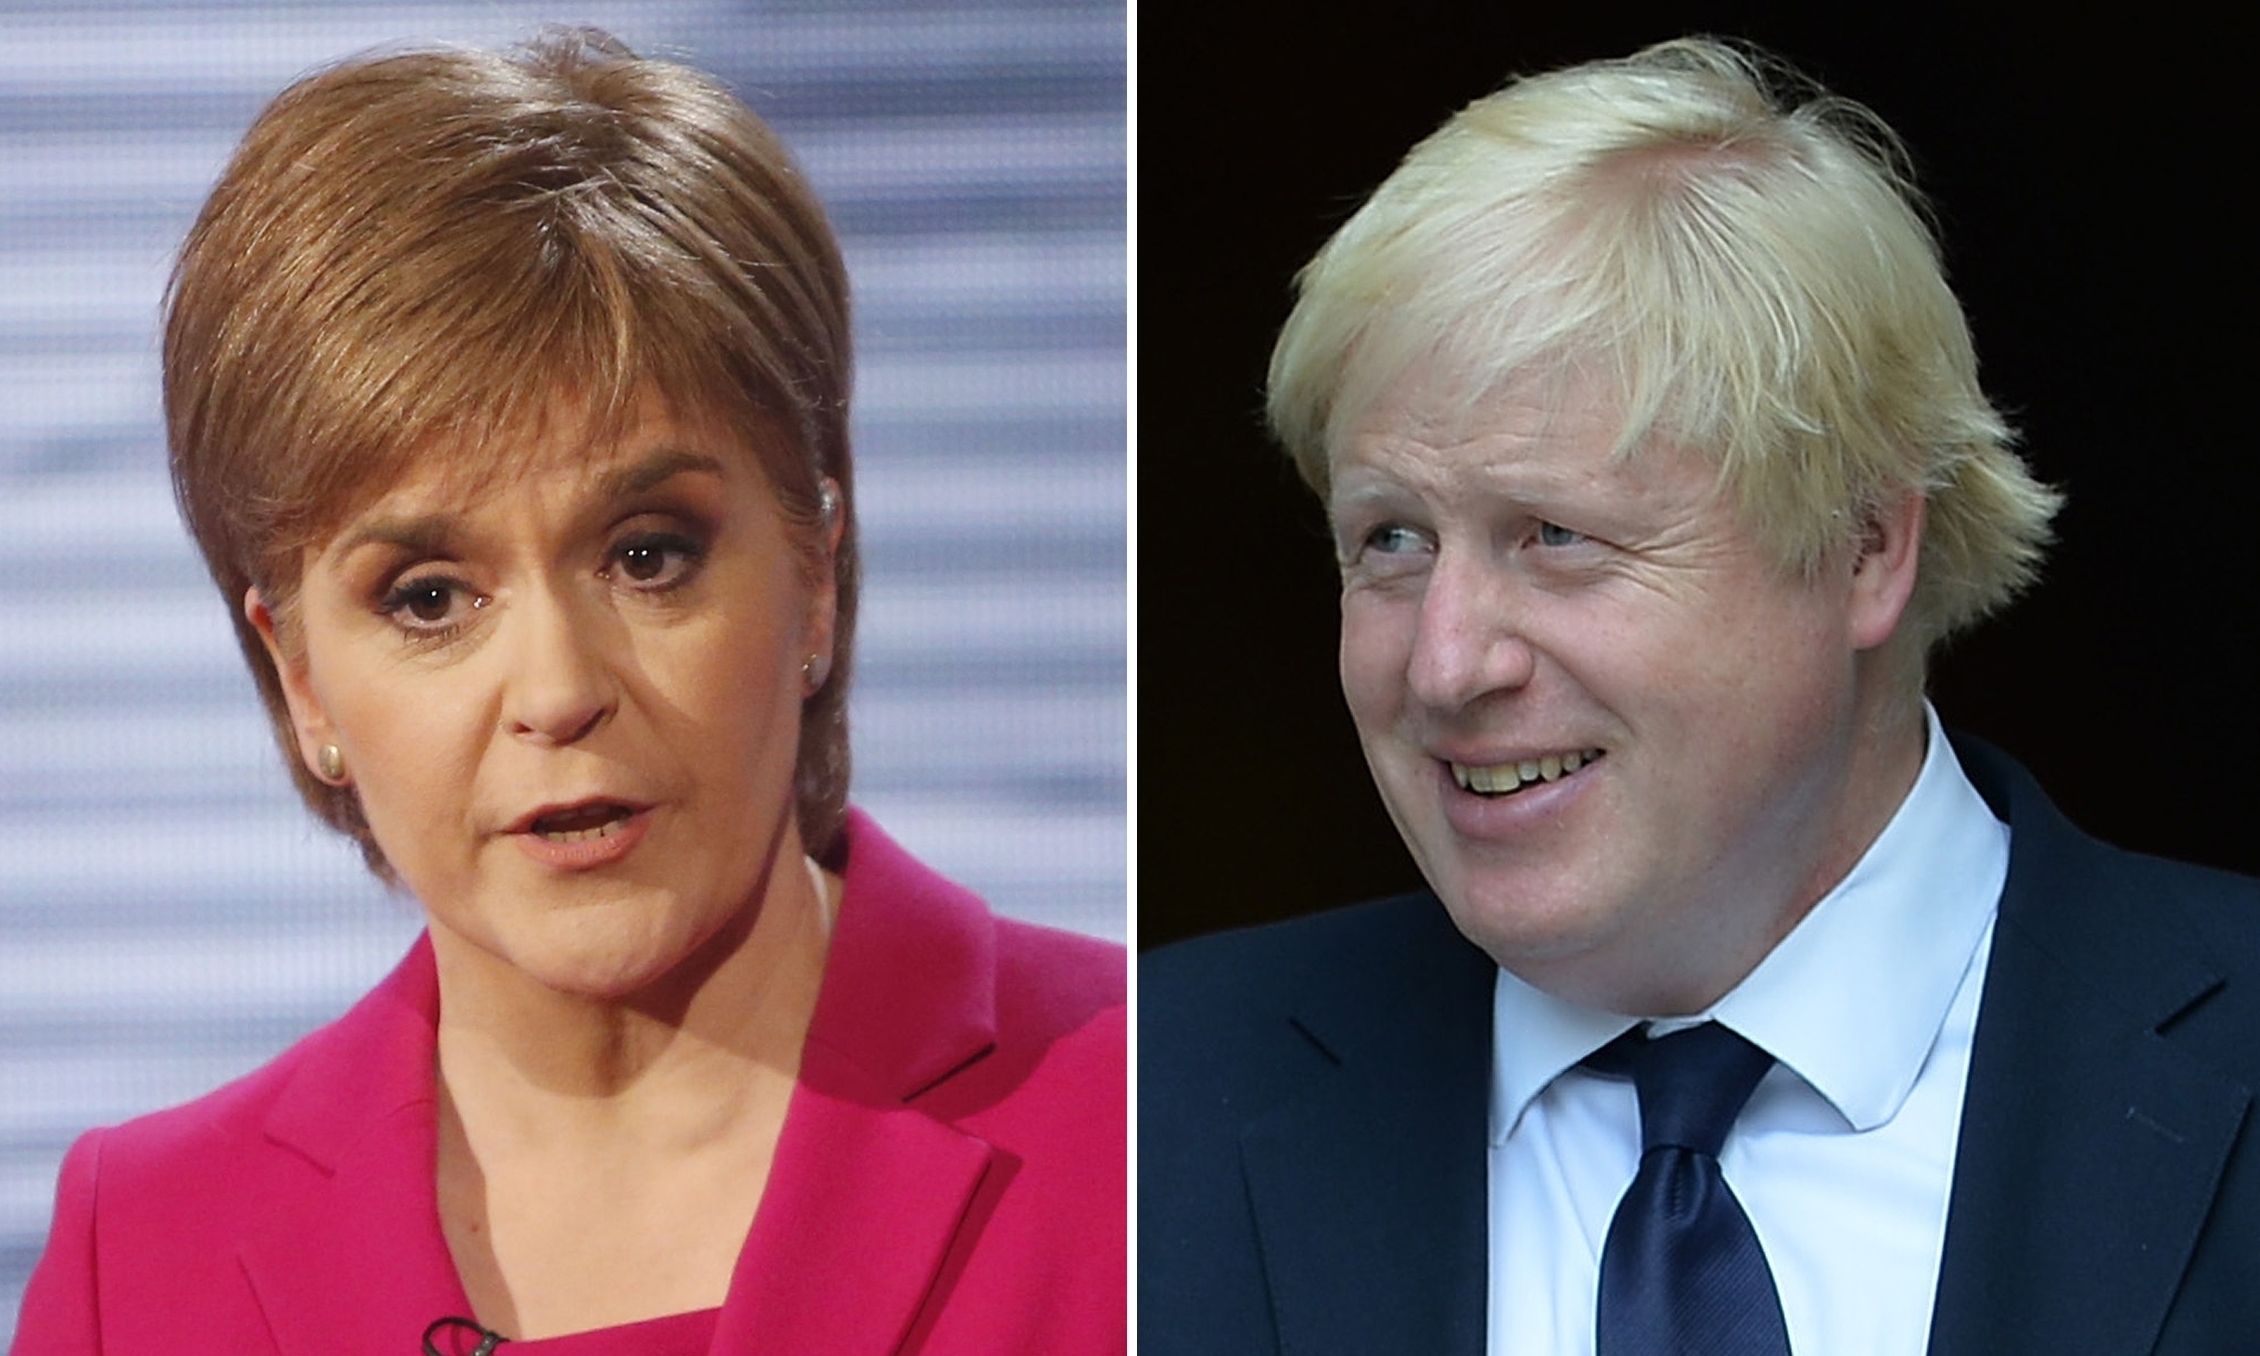 Nicola Sturgeon and Boris Johnson will go head-to-head in an EU debate.